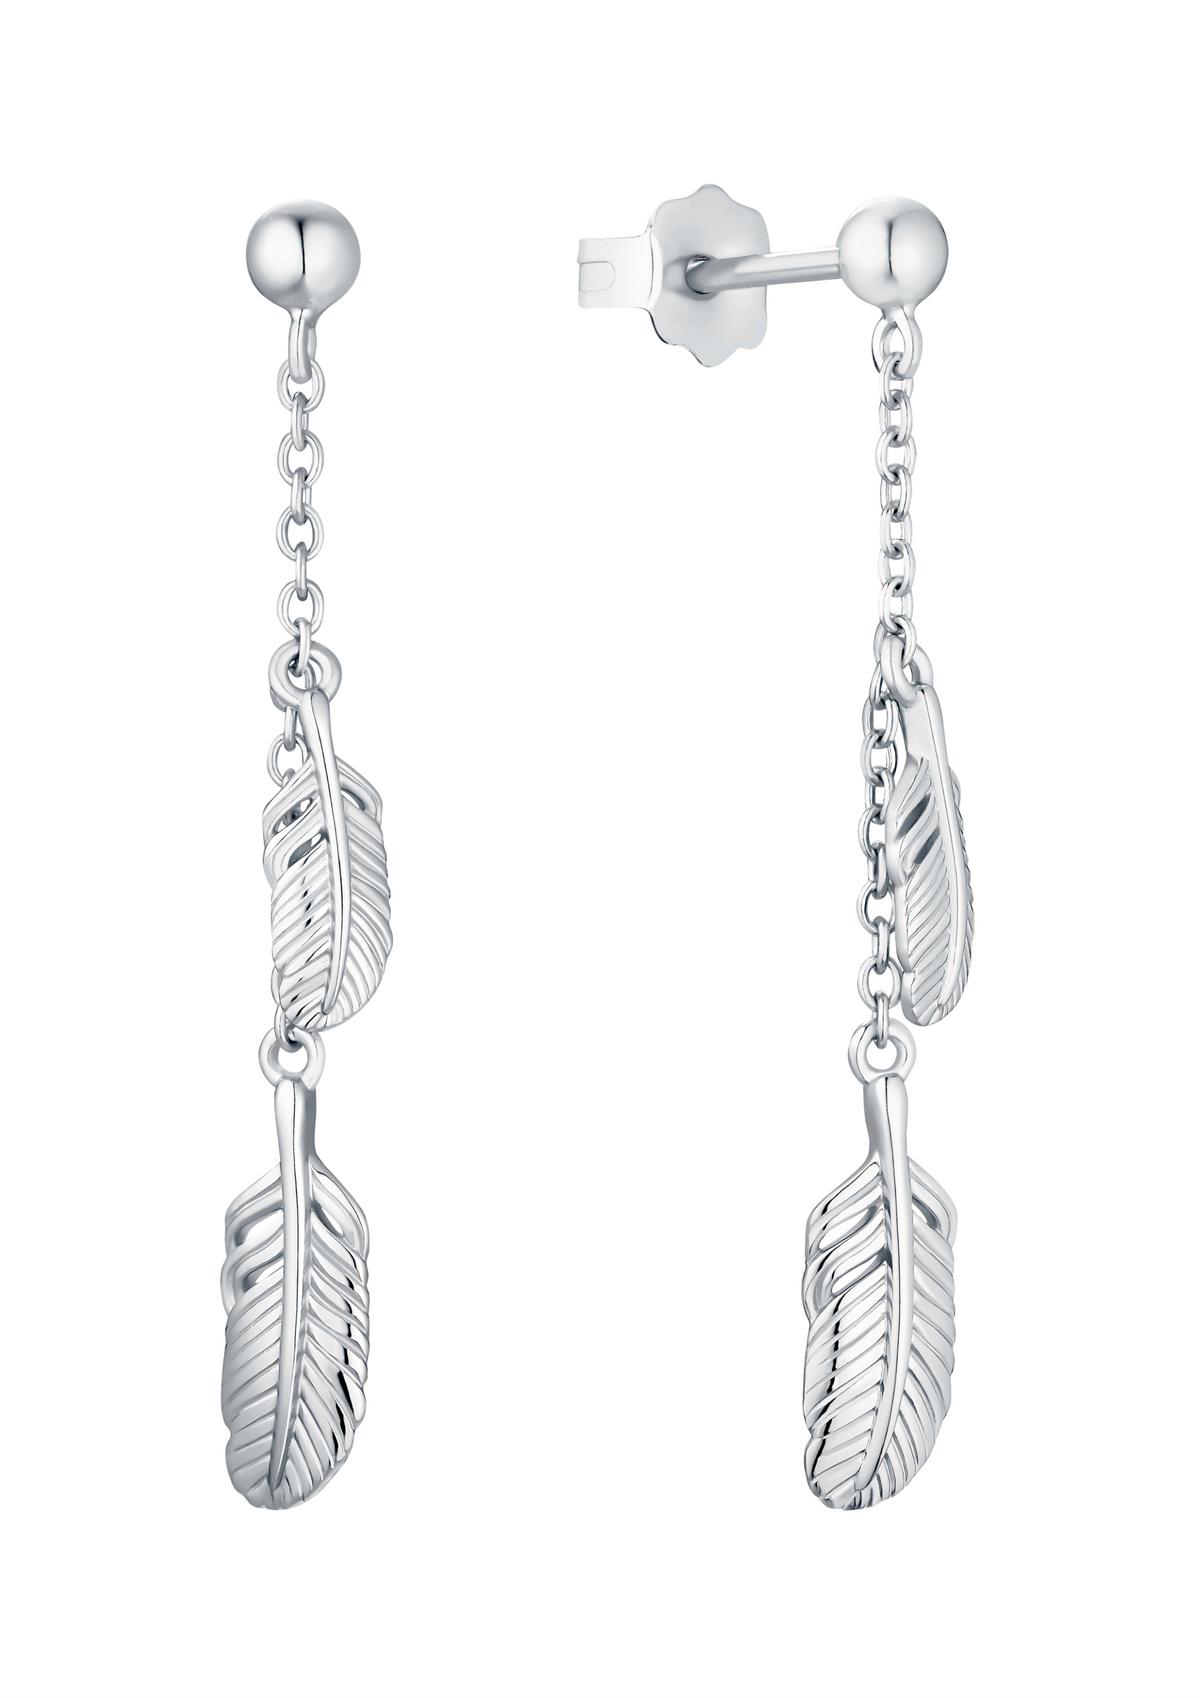 Feder-Ohrringe aus Silber 925 - silber